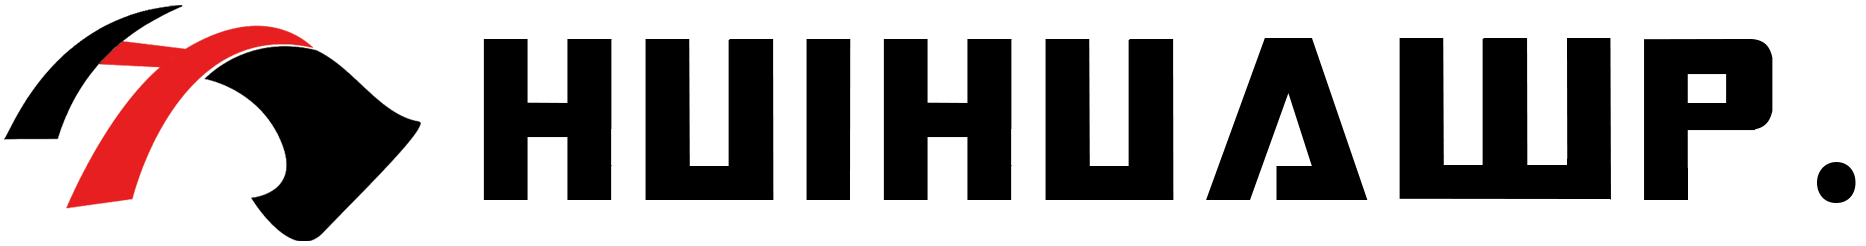 huihua logo